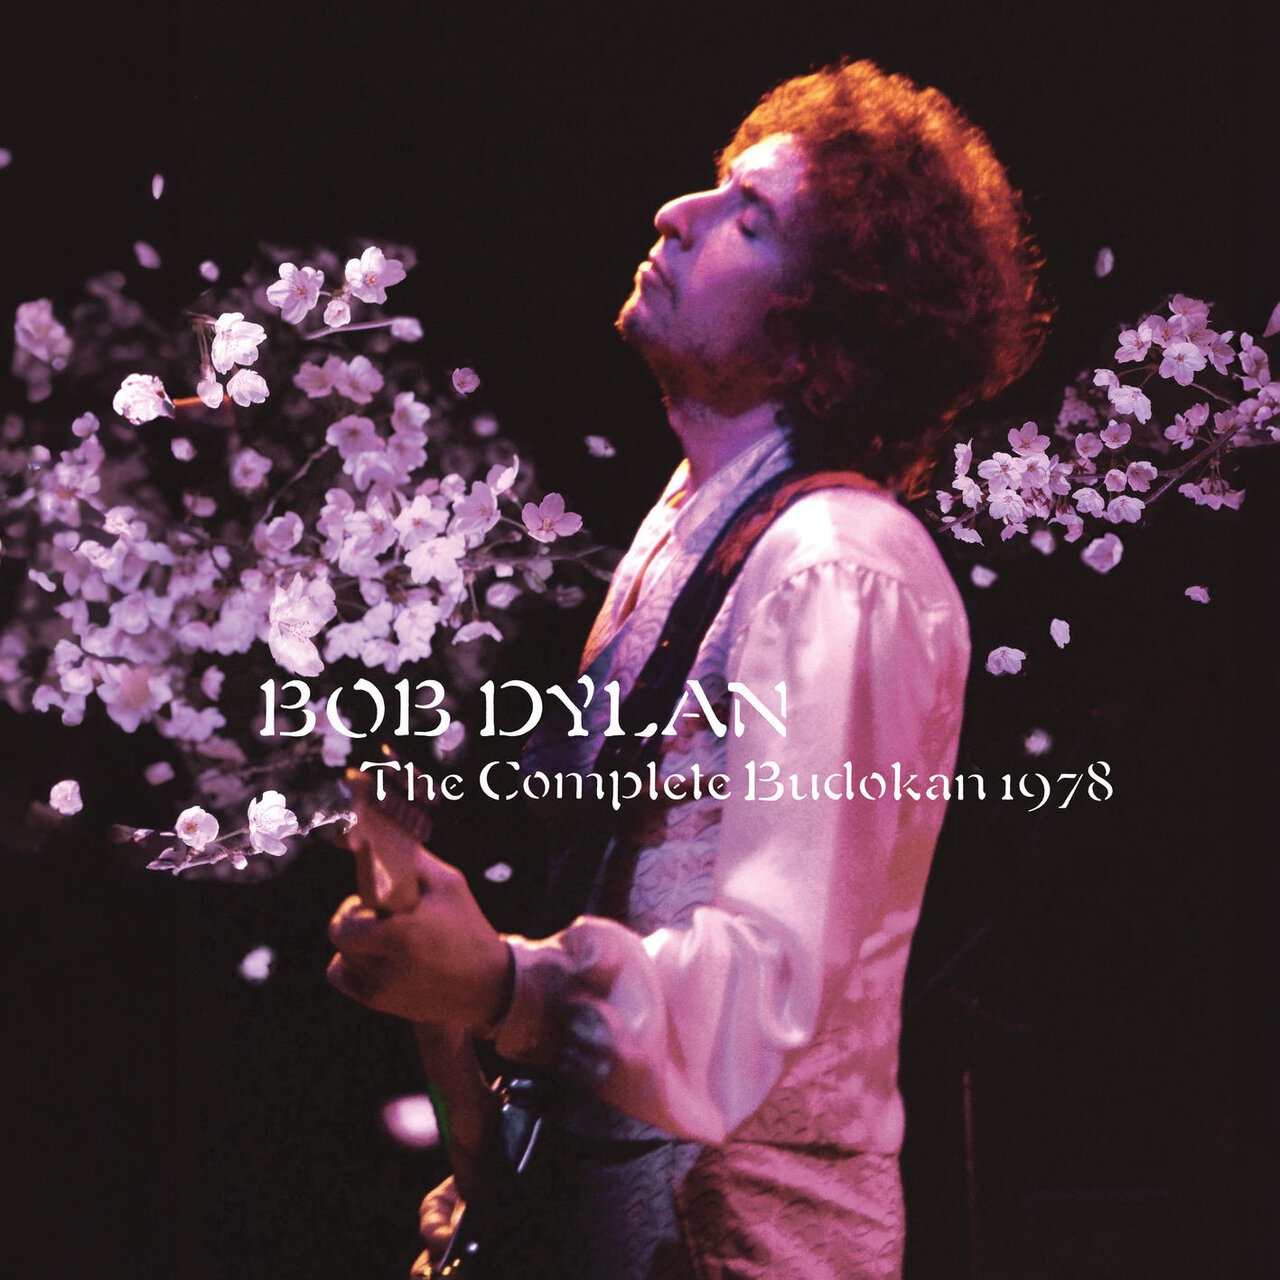 Bob Dylan The Complete Budokan CD album cover